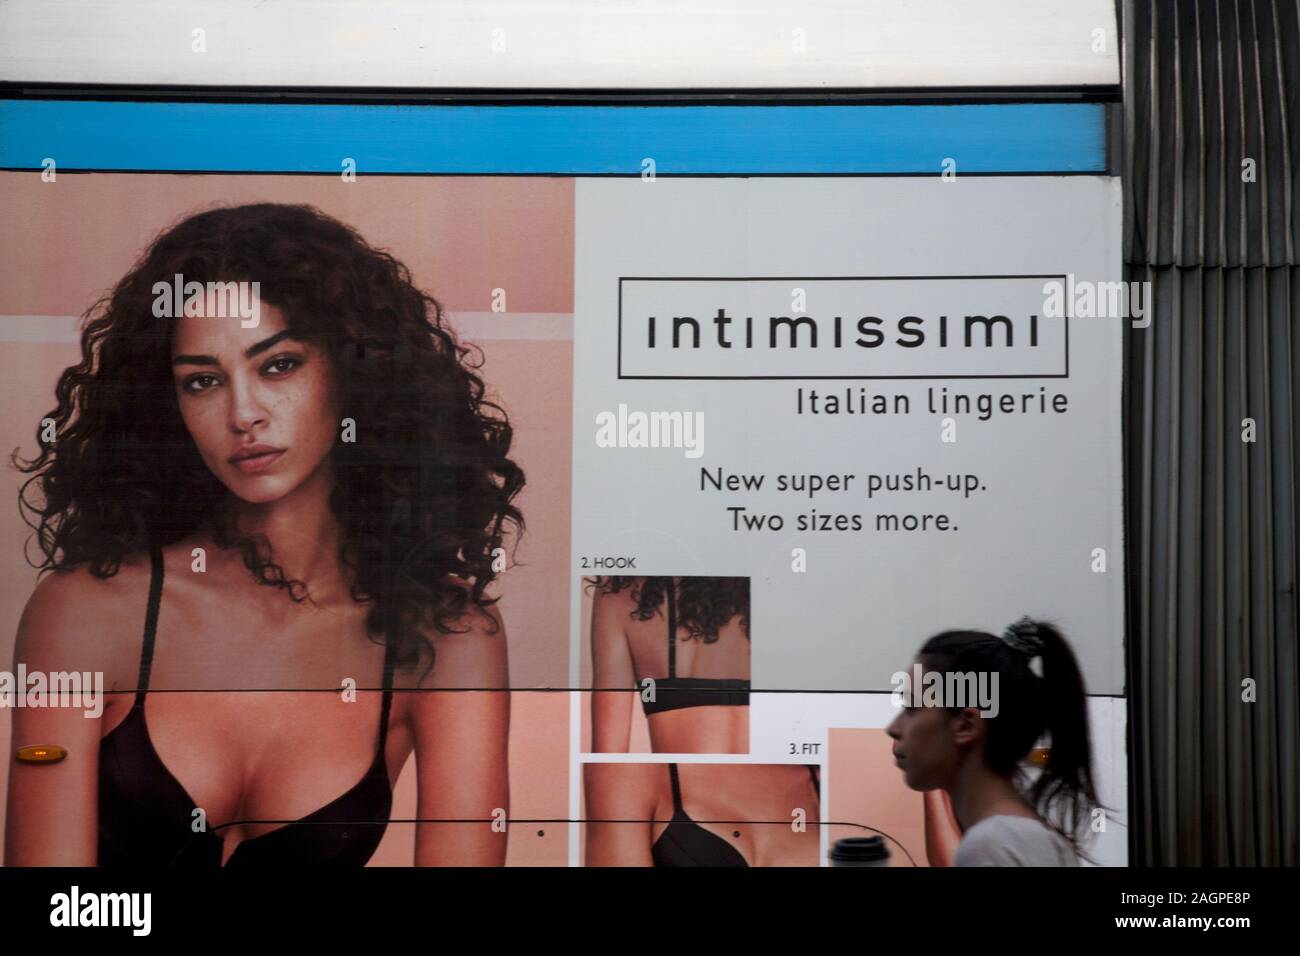 intimissimi italian lingerie advert on tram glyfada athens attica greece  Stock Photo - Alamy